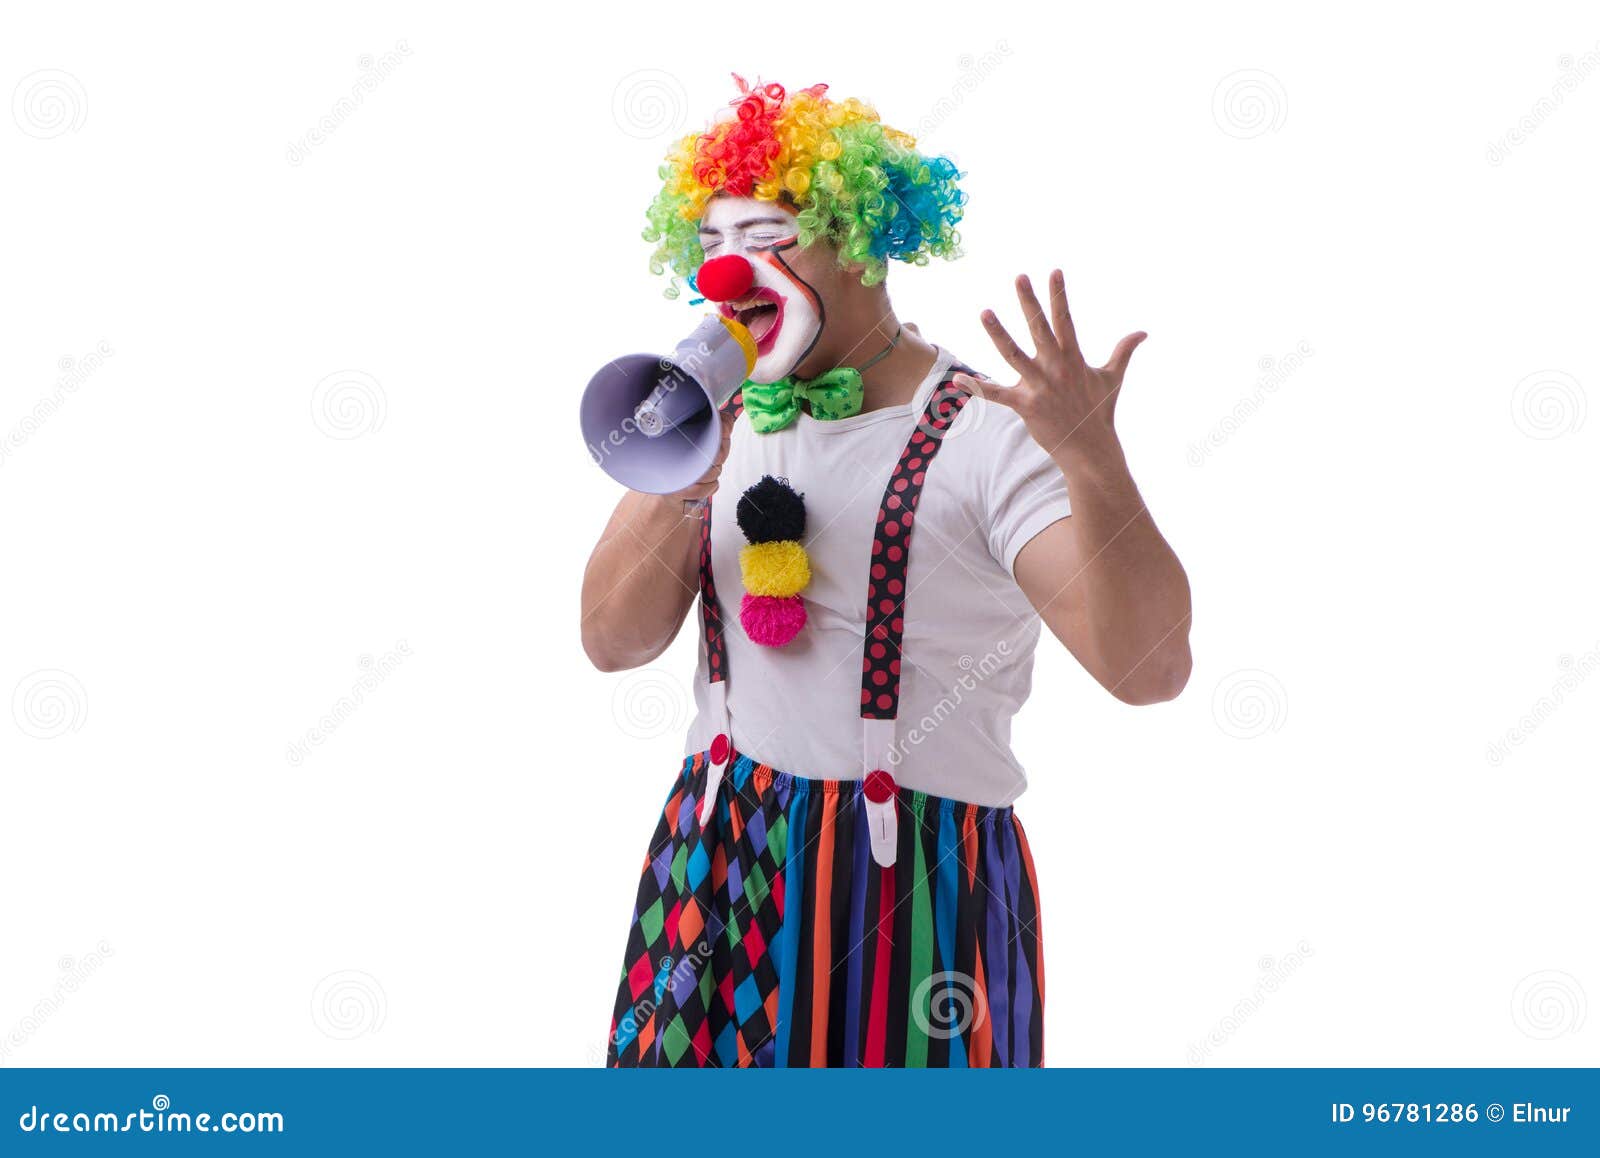 funny-clown-megaphone-isolated-white-background-96781286.jpg